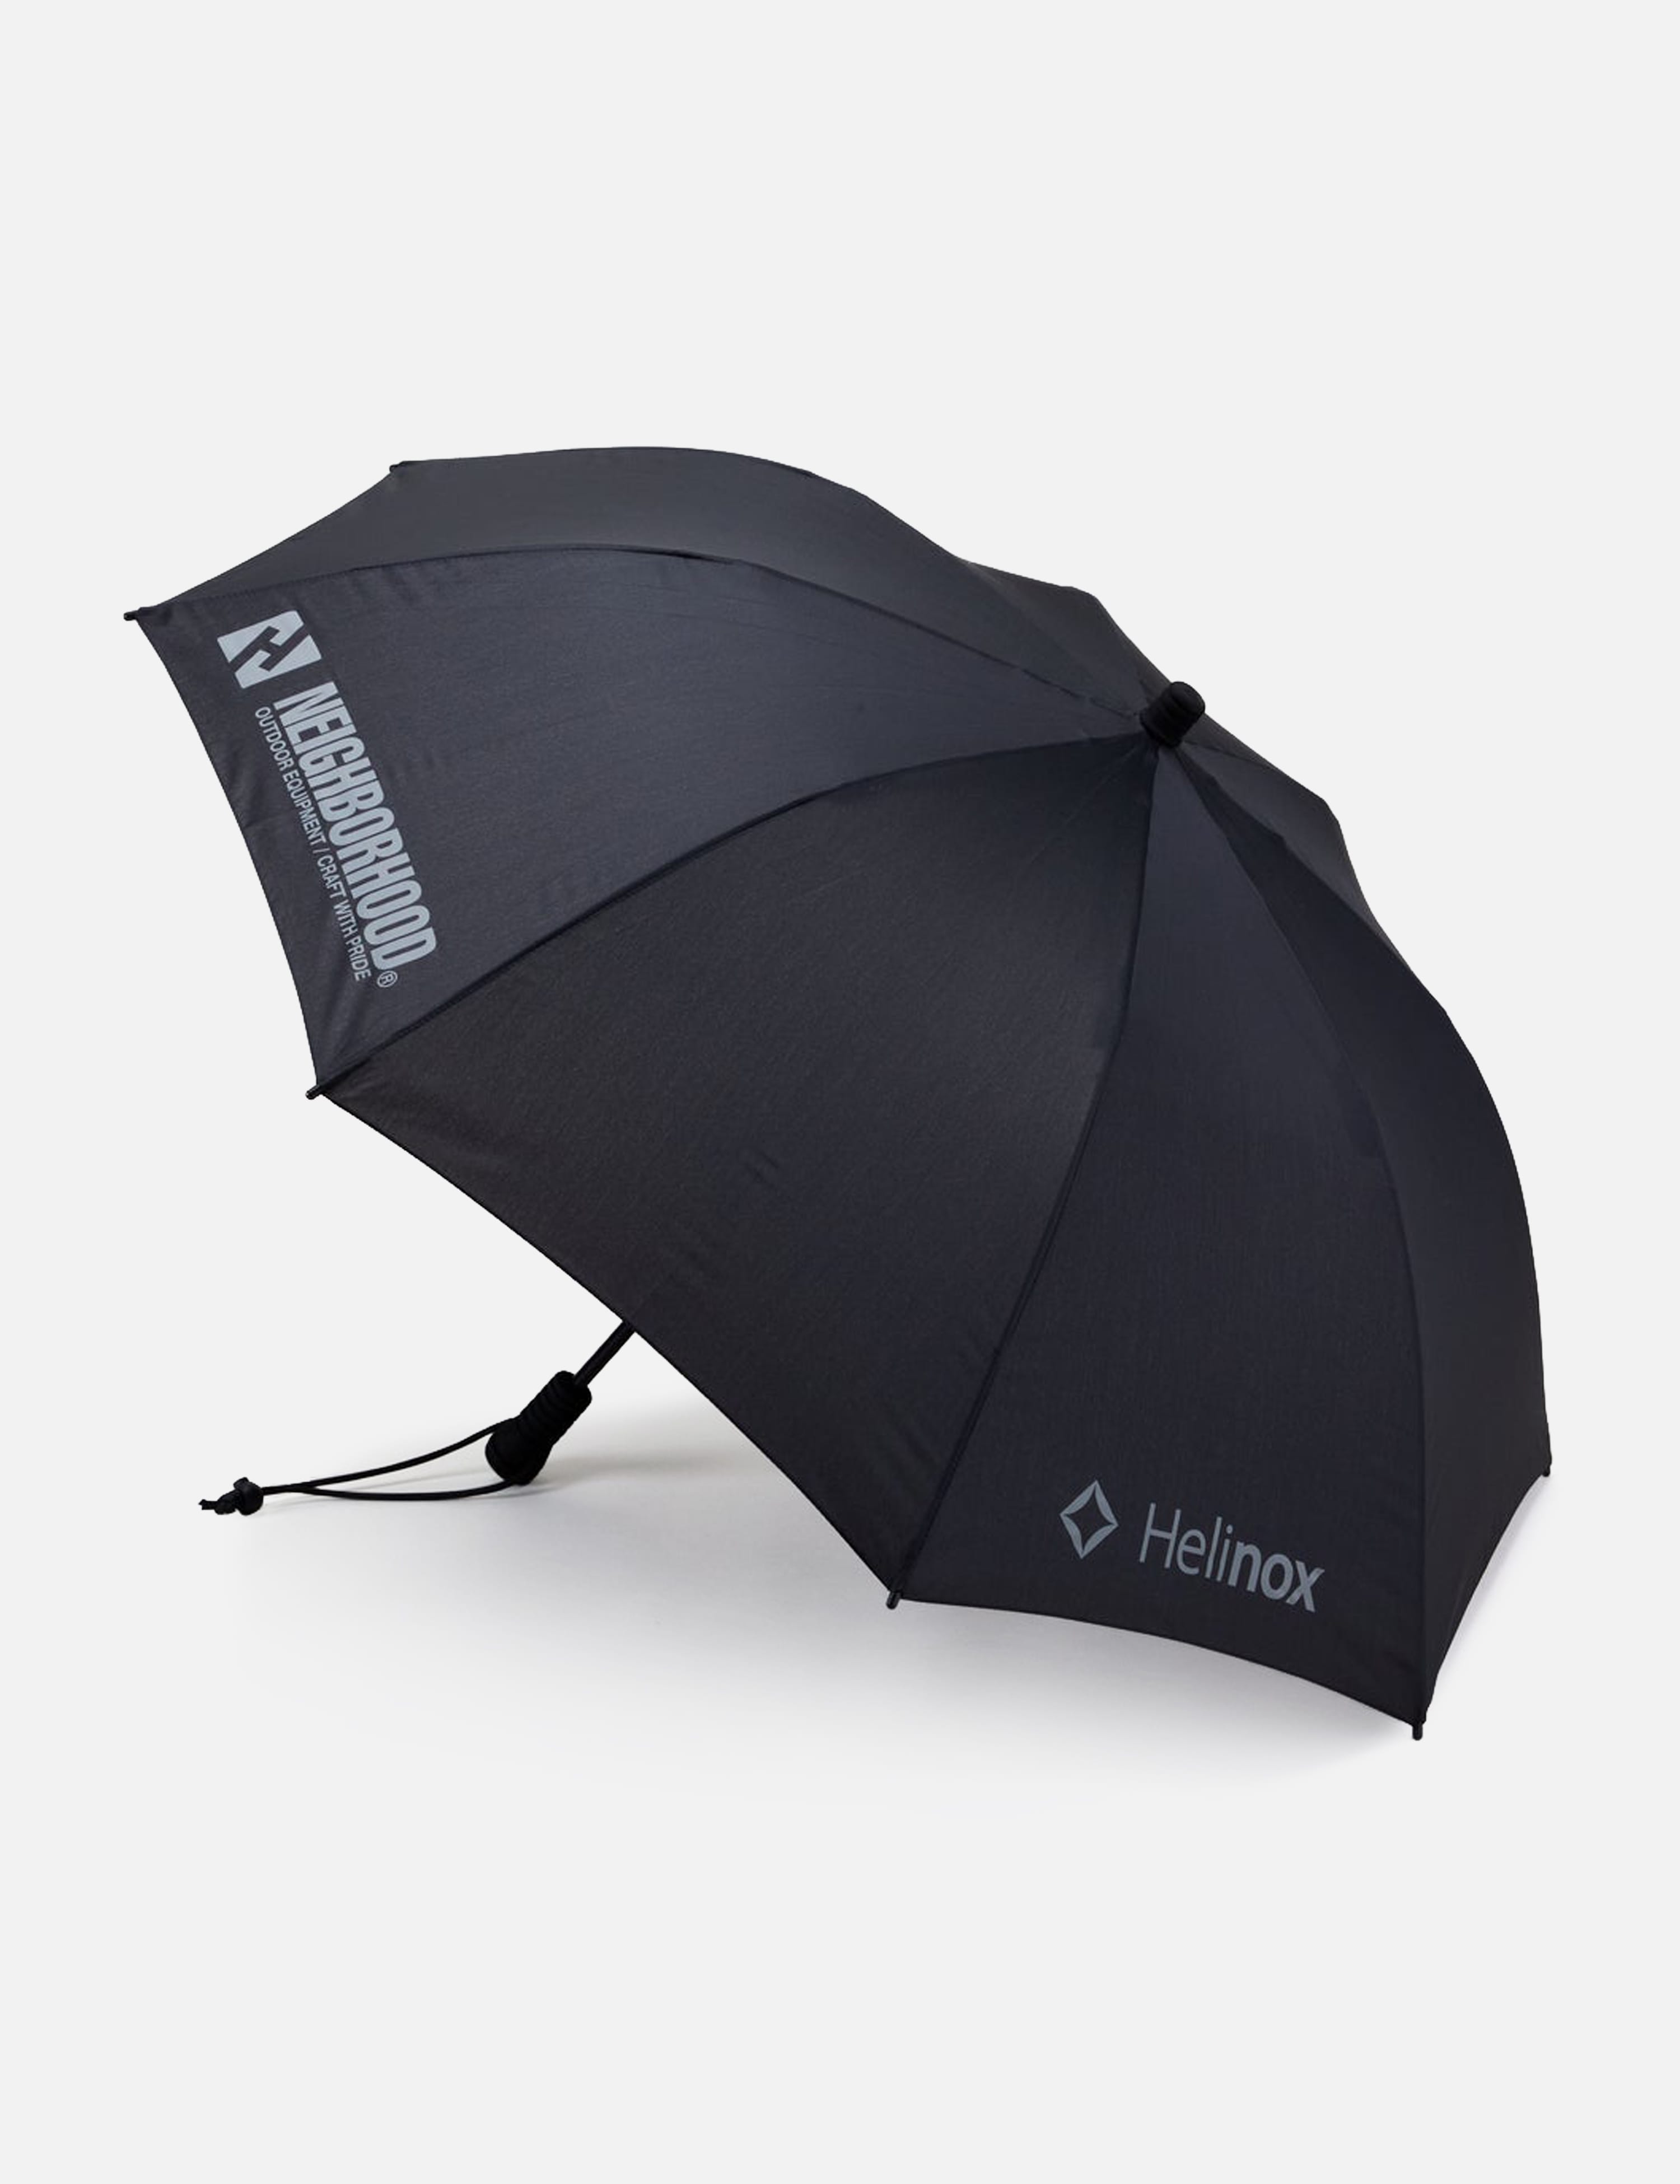 NEIGHBORHOOD - Neighborhood x Helinox Umbrella | HBX - Globally Curated  Fashion and Lifestyle by Hypebeast